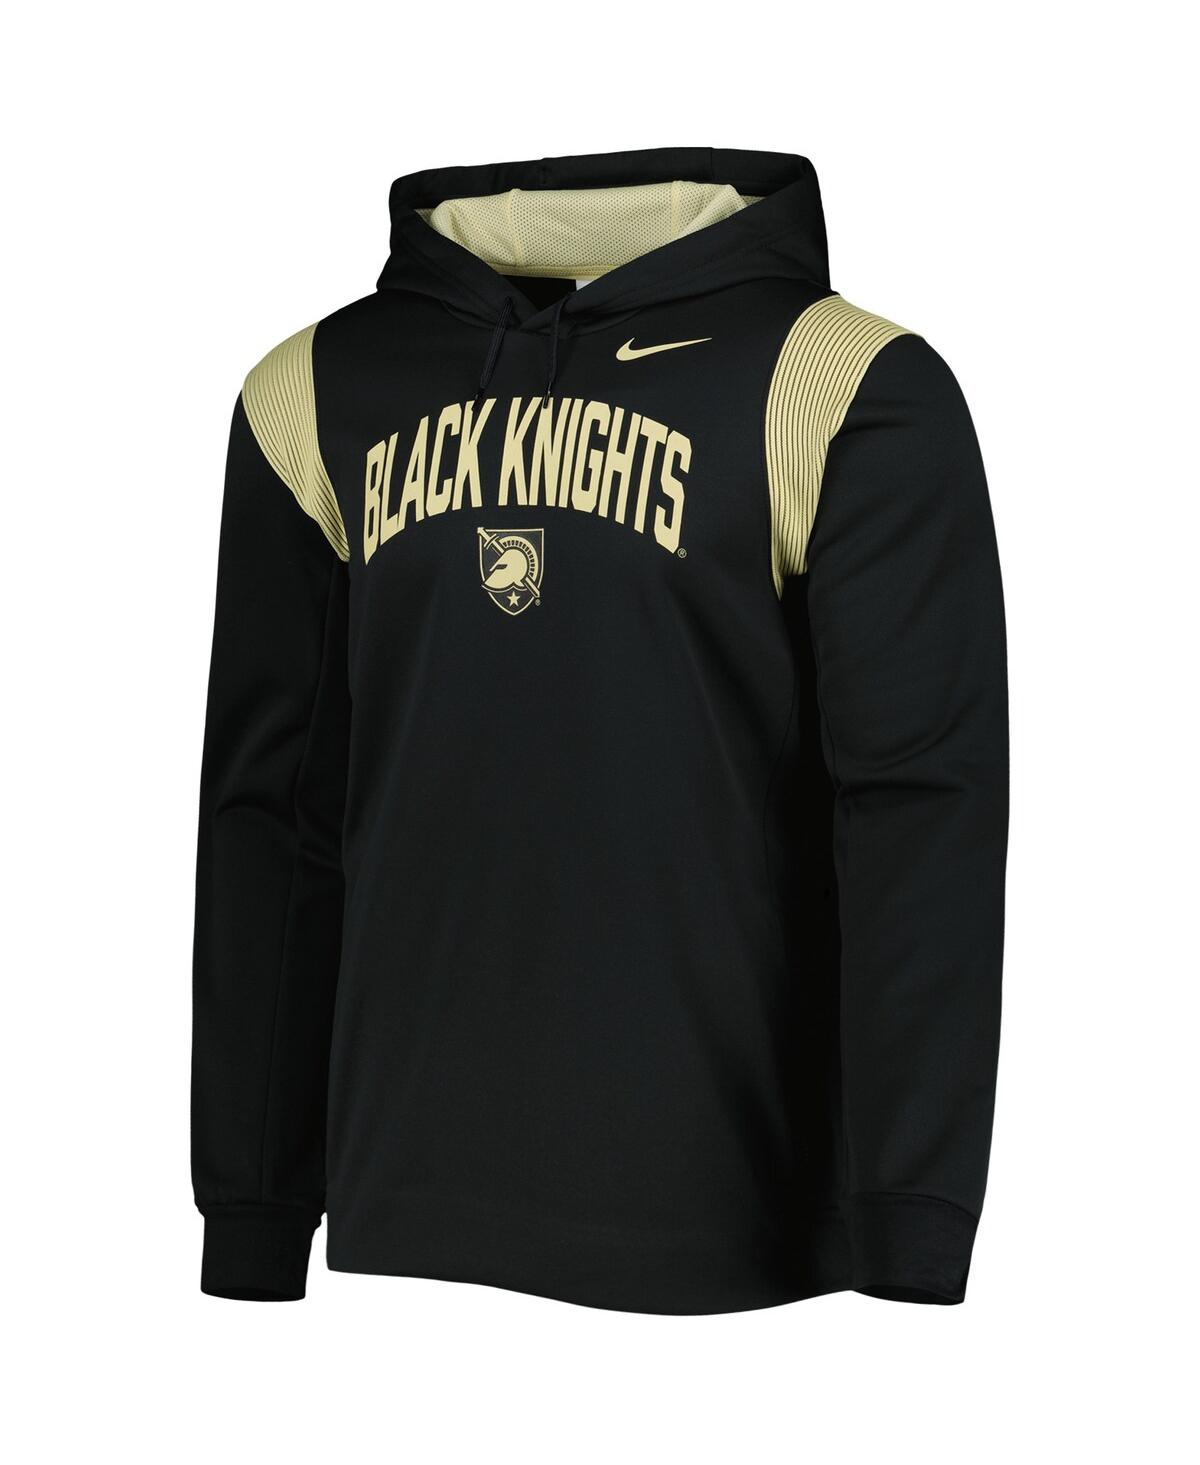 Shop Nike Men's  Black Army Black Knights 2022 Sideline Performance Pullover Hoodie